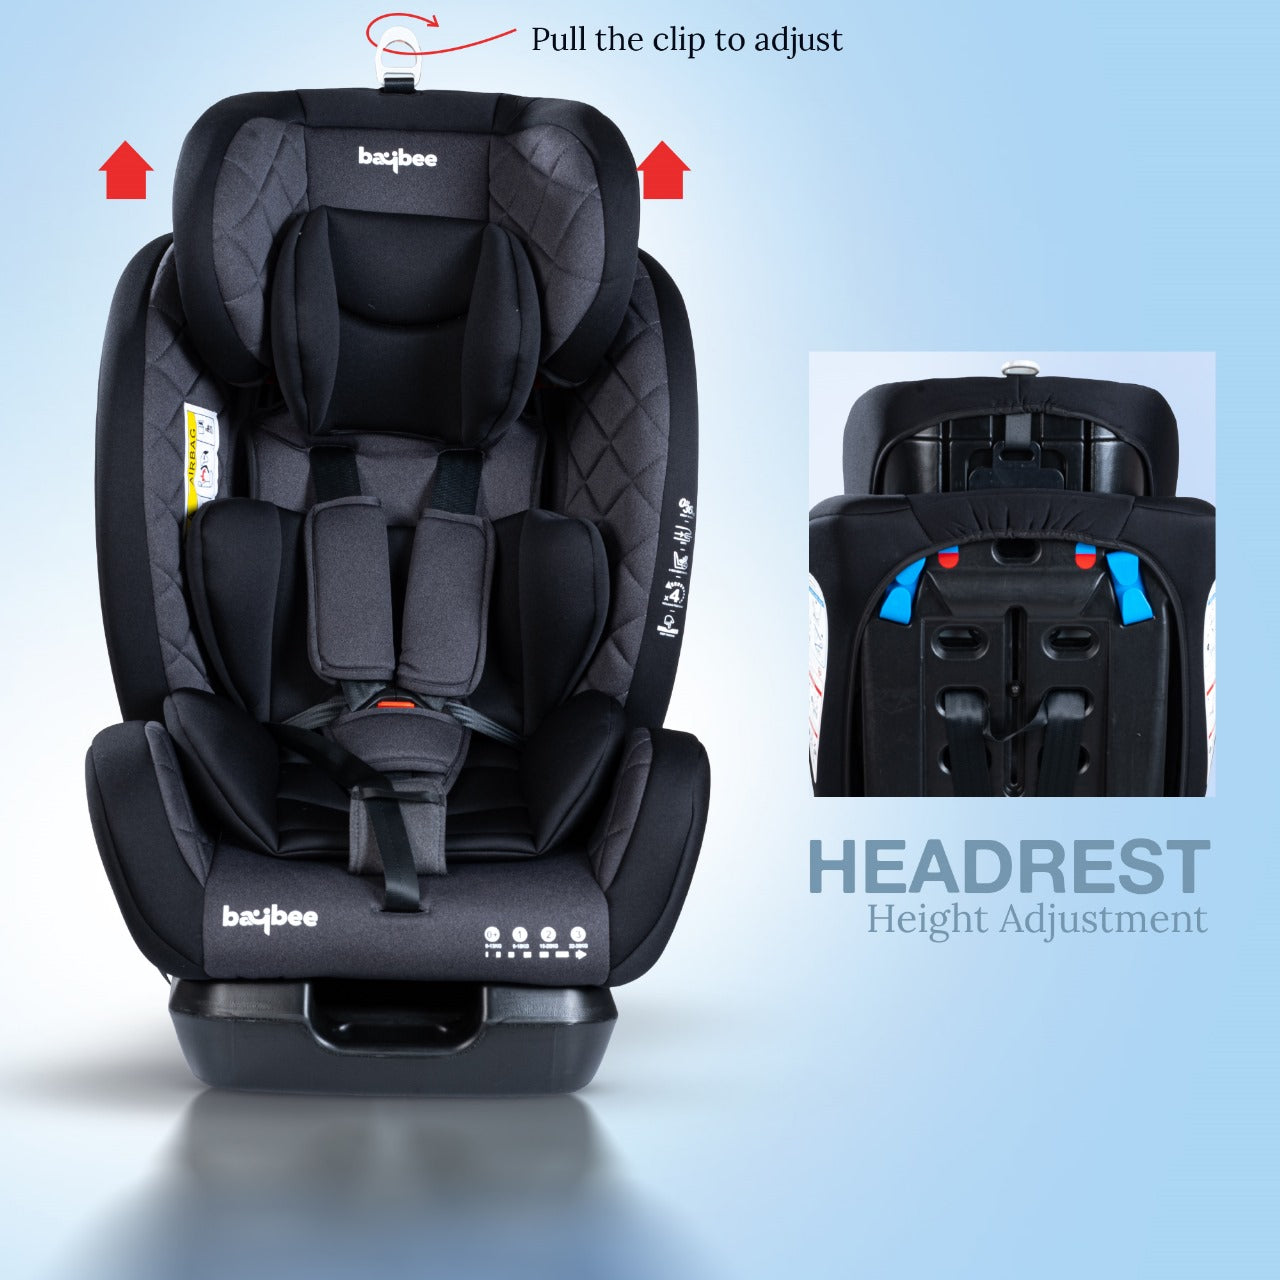 Minikin Defender Isofix Car Seat I 5 Point Safety Harness I NB - 12 Years I Black